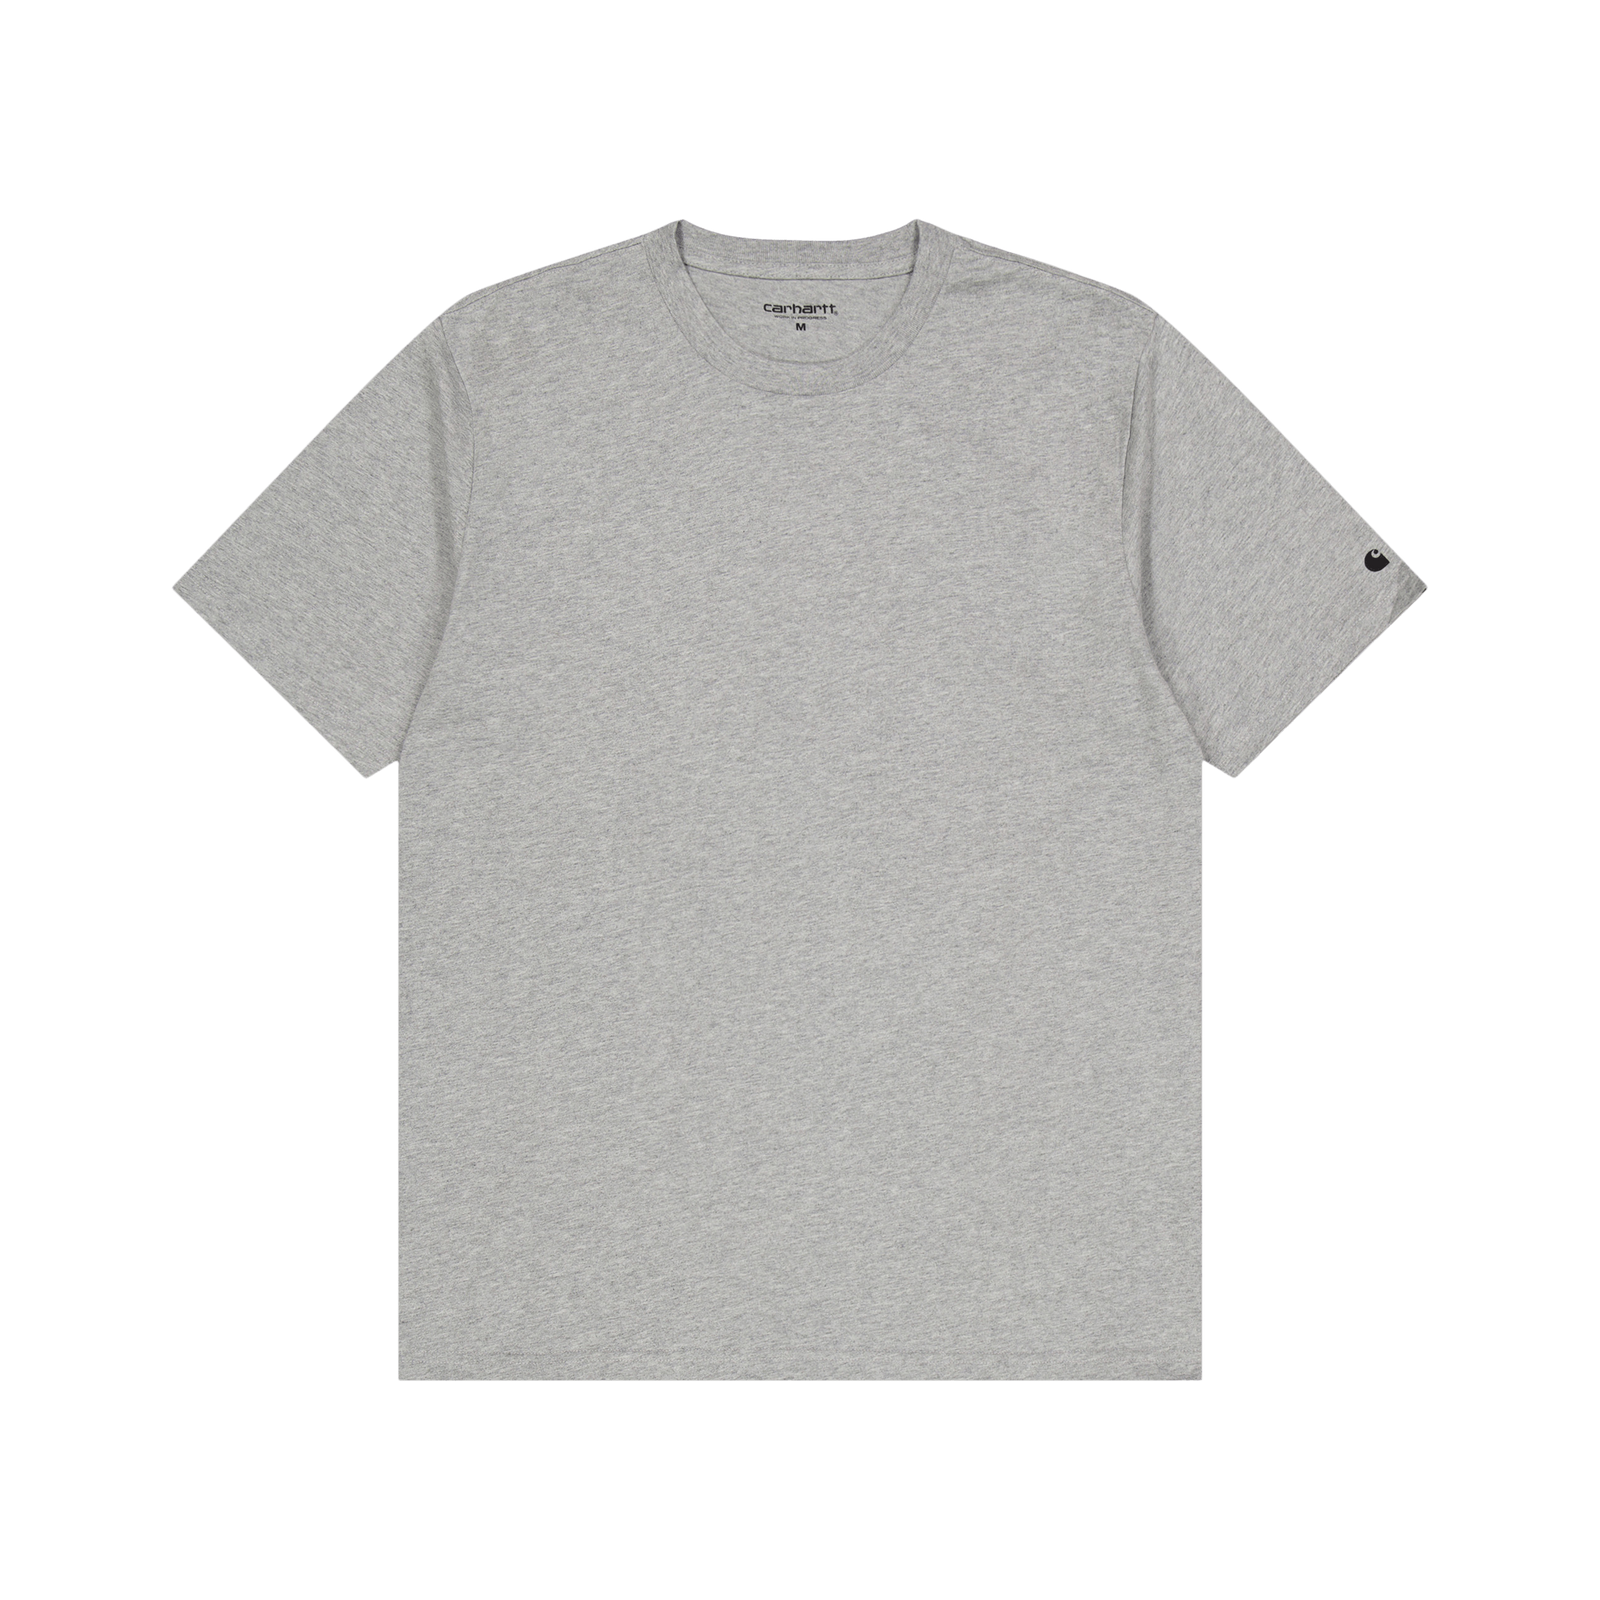 S/s Base T-shirt Grey Heather / Black